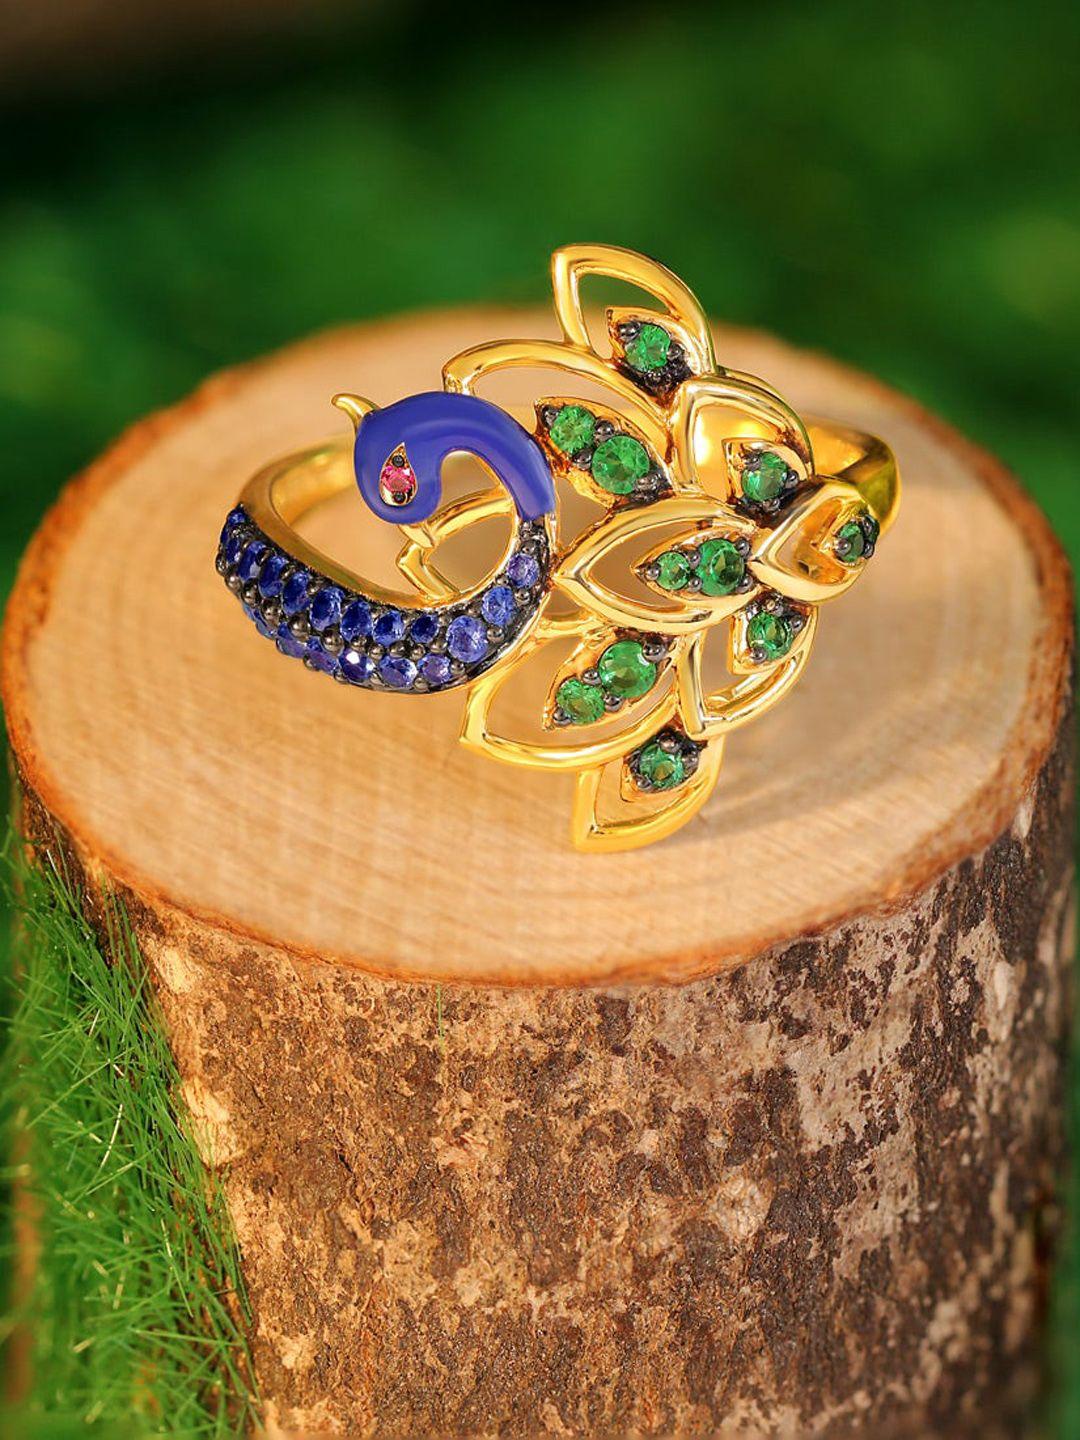 candere a kalyan jewellers company 14kt bis hallmark gold gemstone studded ring-3.25gm